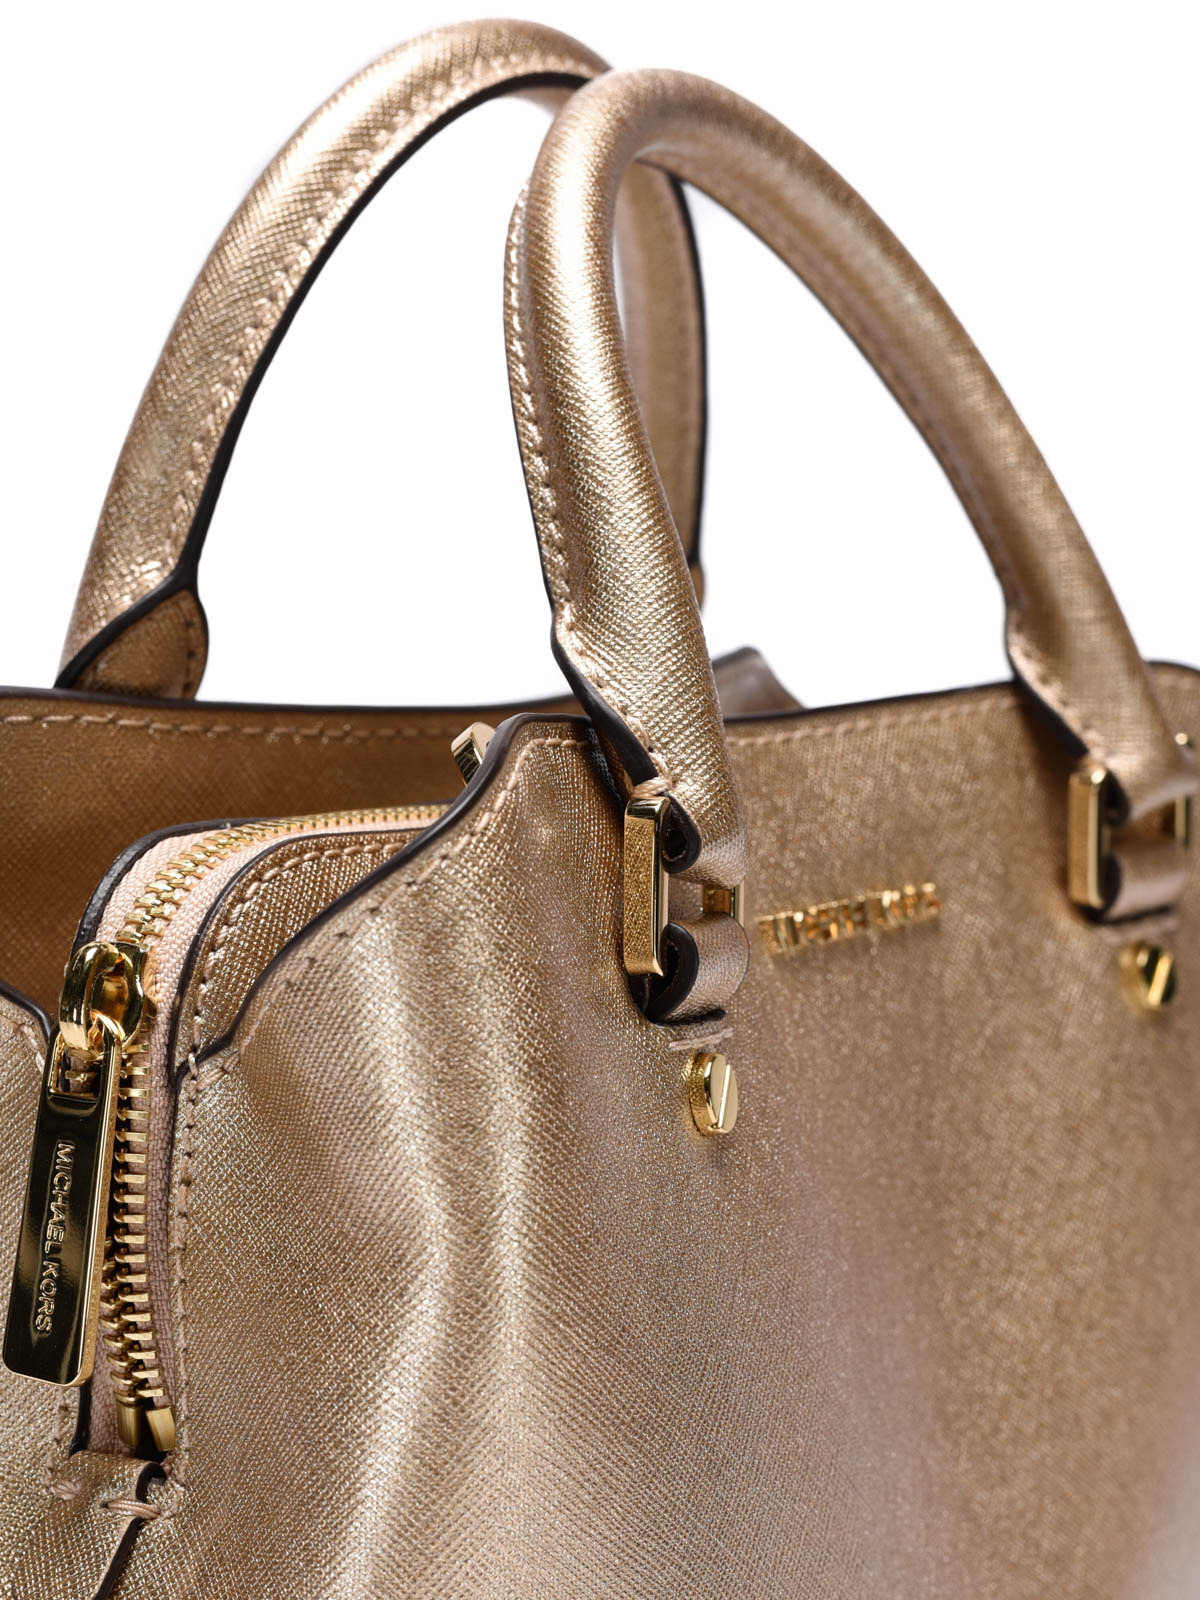 Totes bags Michael Kors - Savannah handbag - 30S6MS7S1M | iKRIX.com